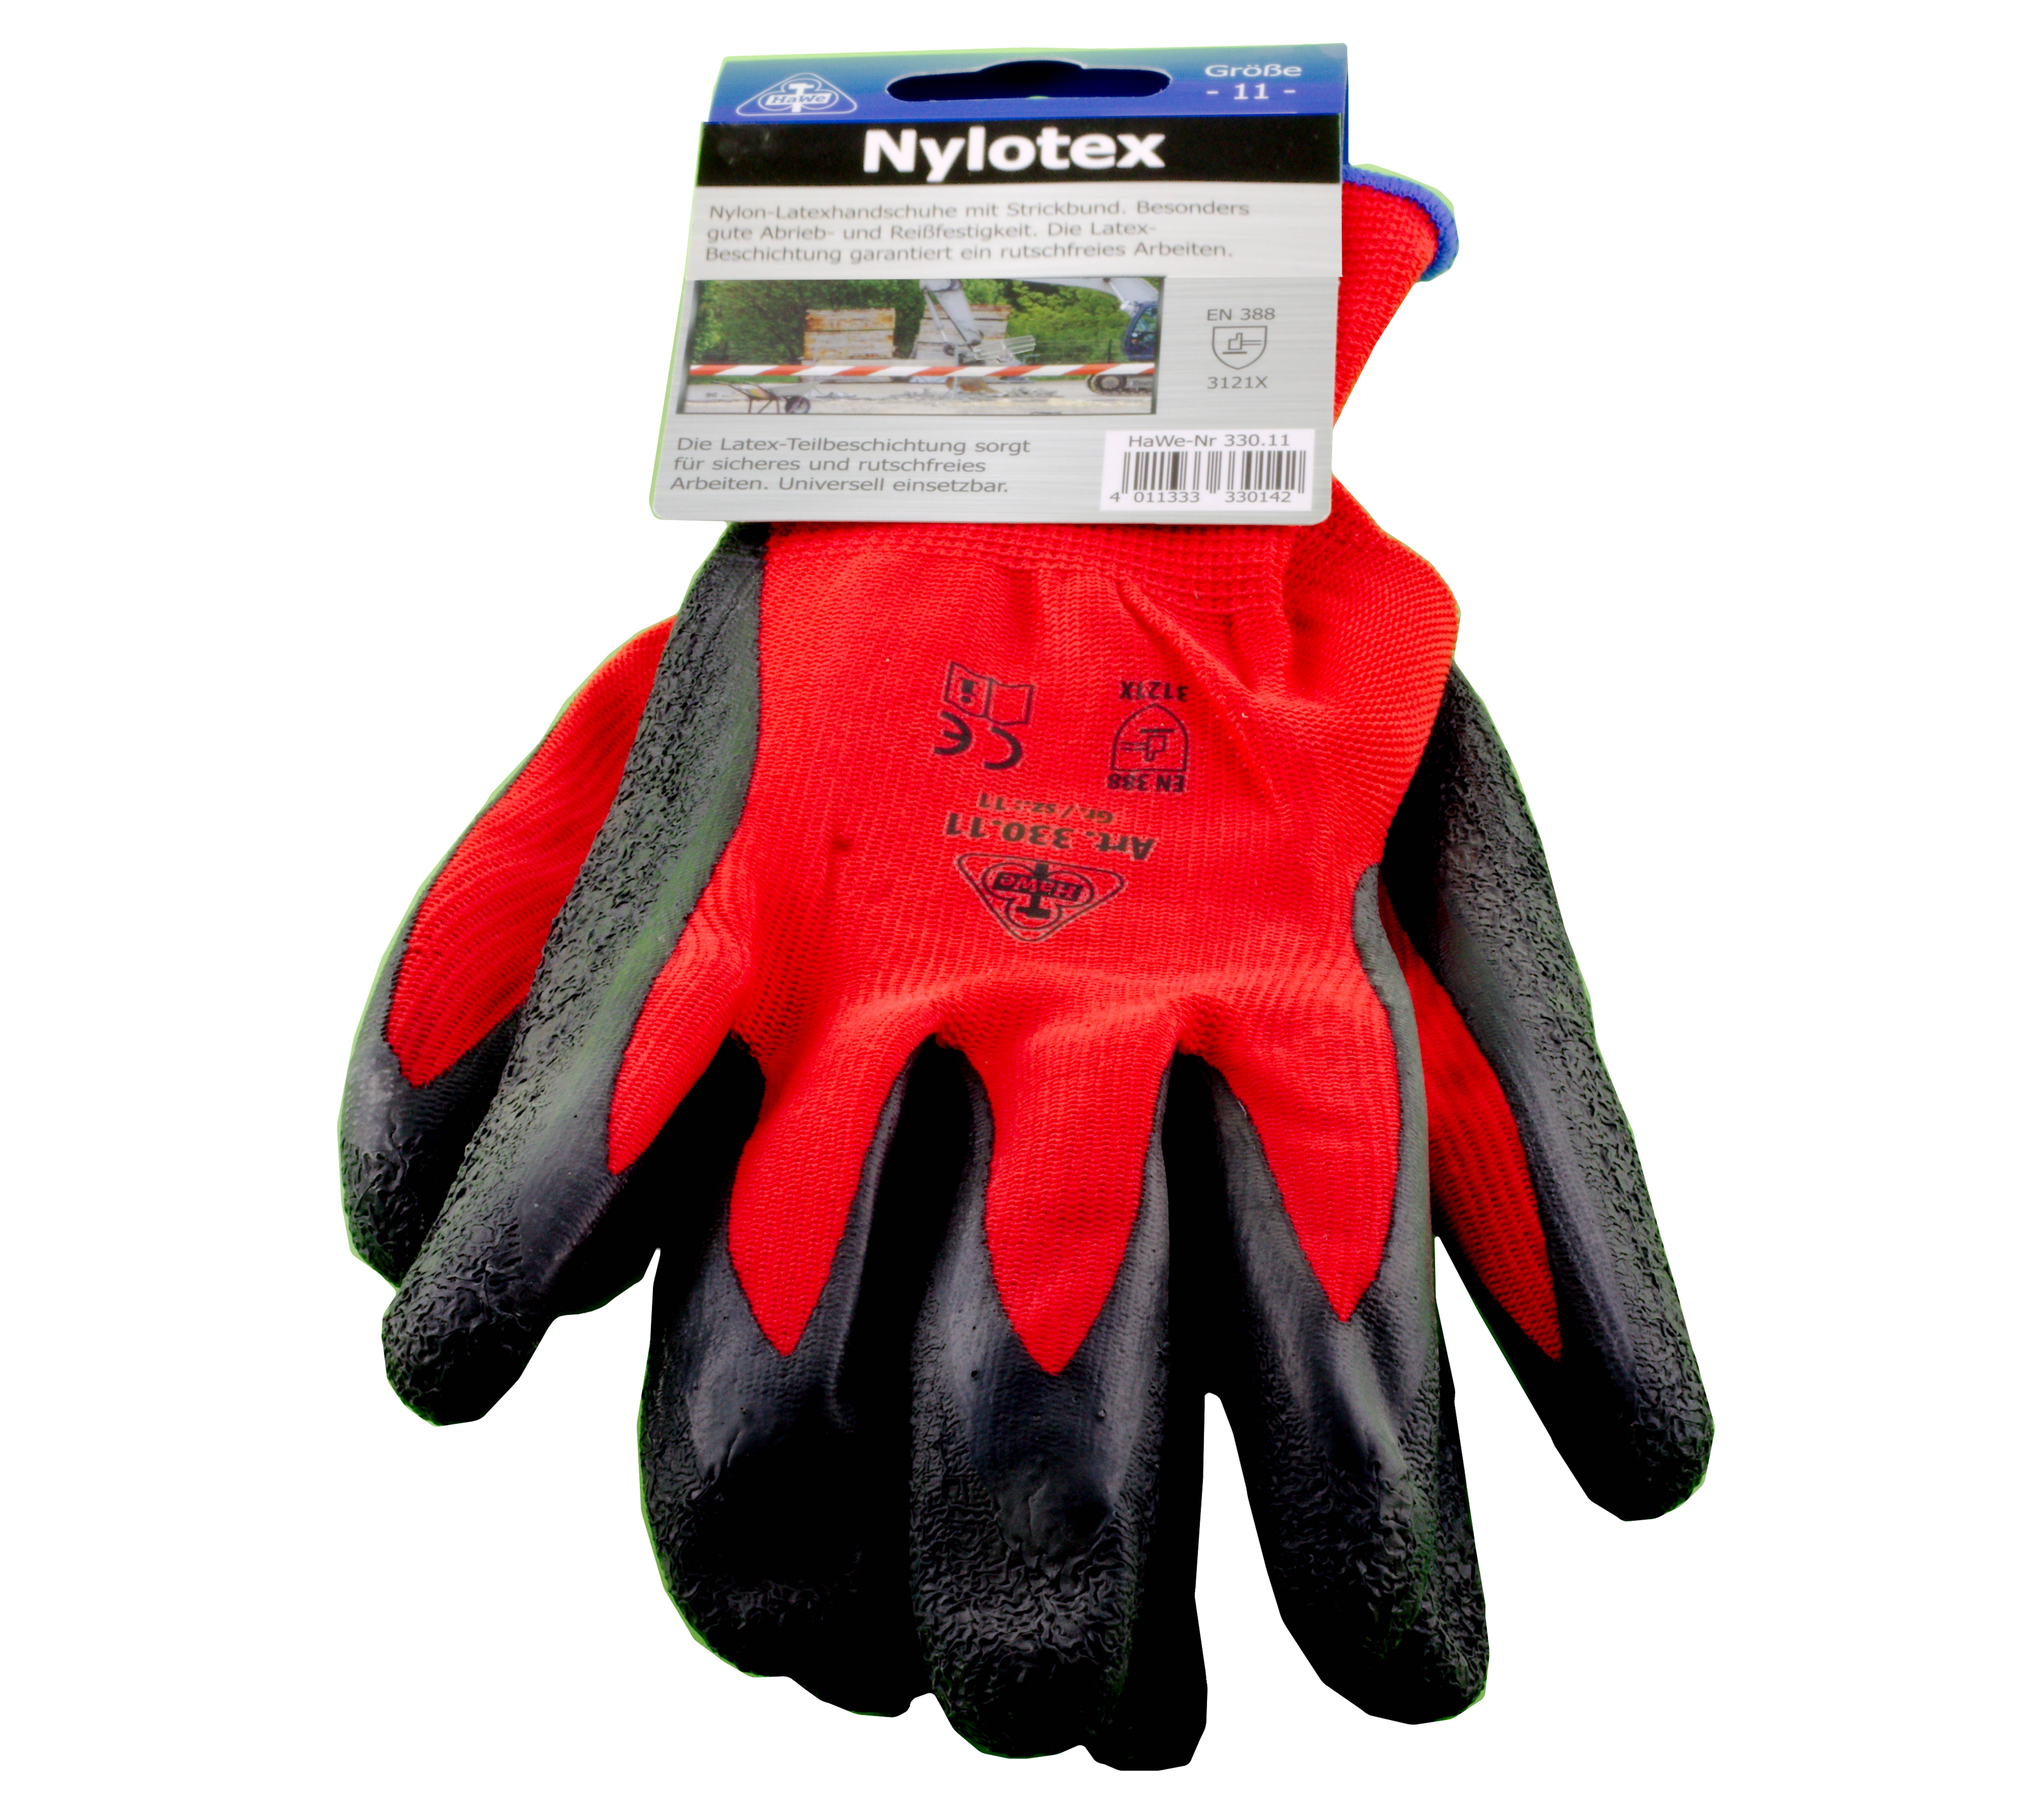 Handschuhe Nylotex rot-schwarz  Gr. 8